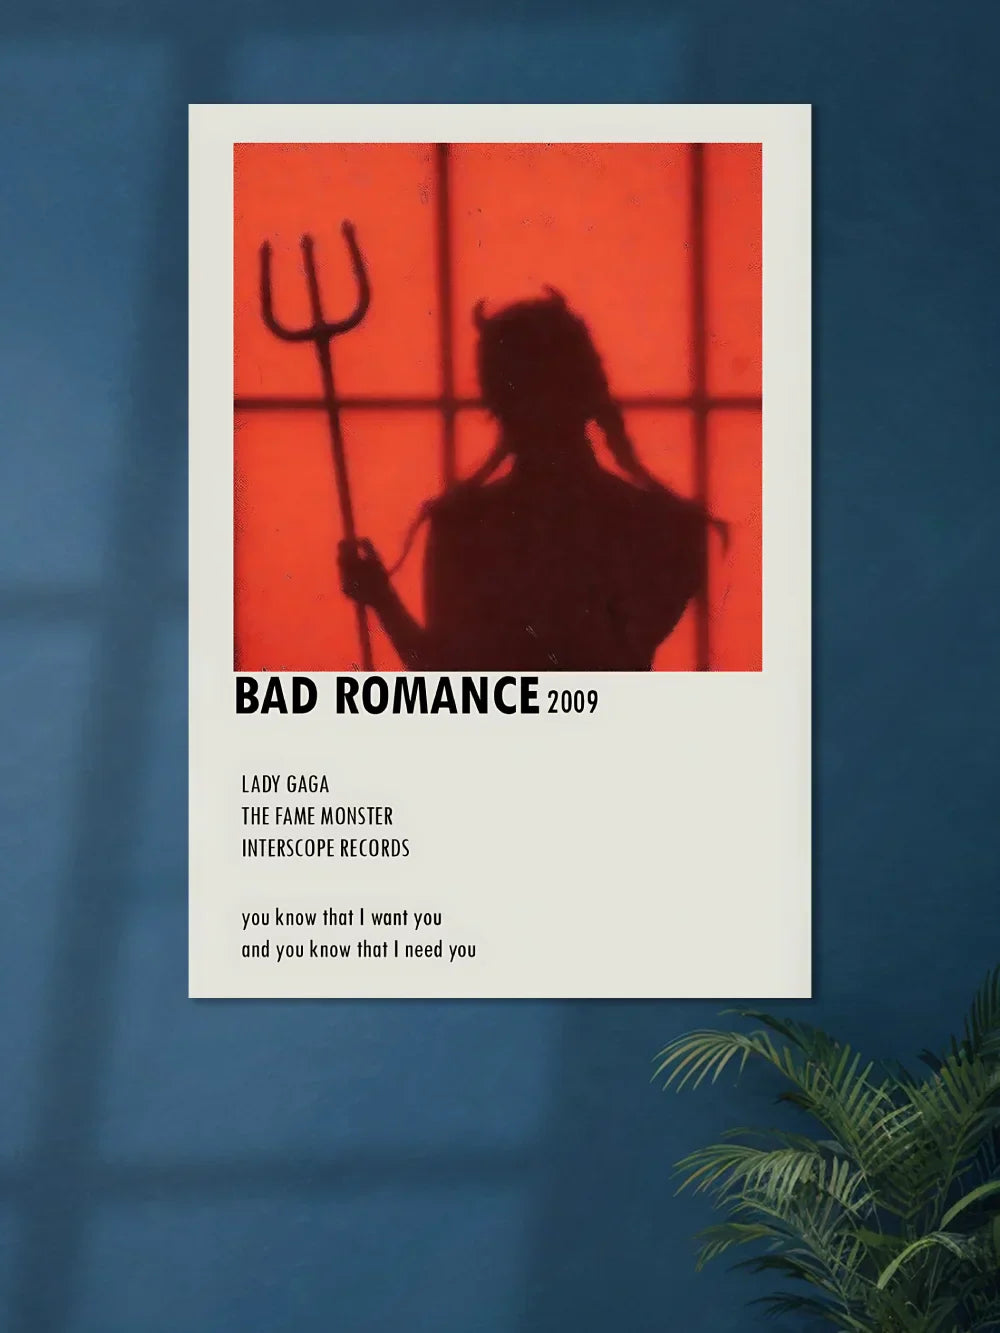 BAD ROMANCE x Ft. Lady Gaga 2009 | Music Poster